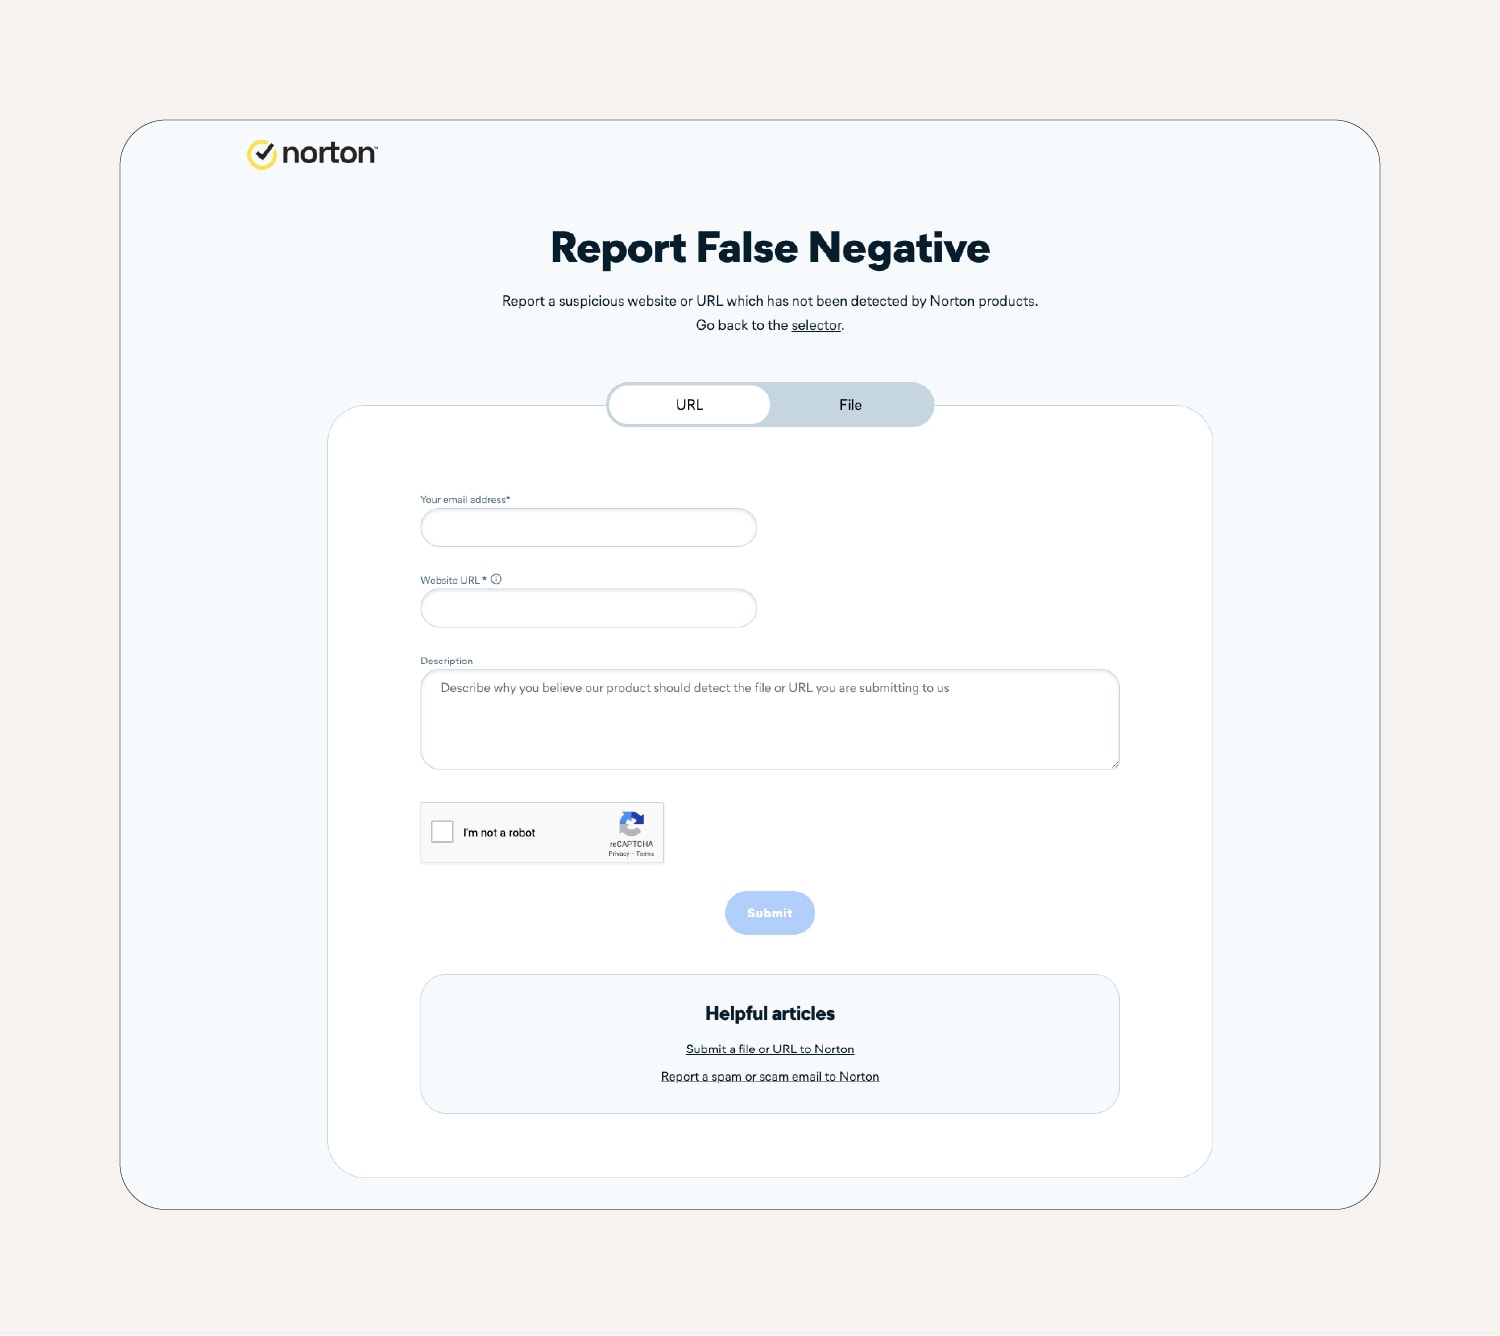 Norton’s Report False Negative form for reporting suspicious websites.